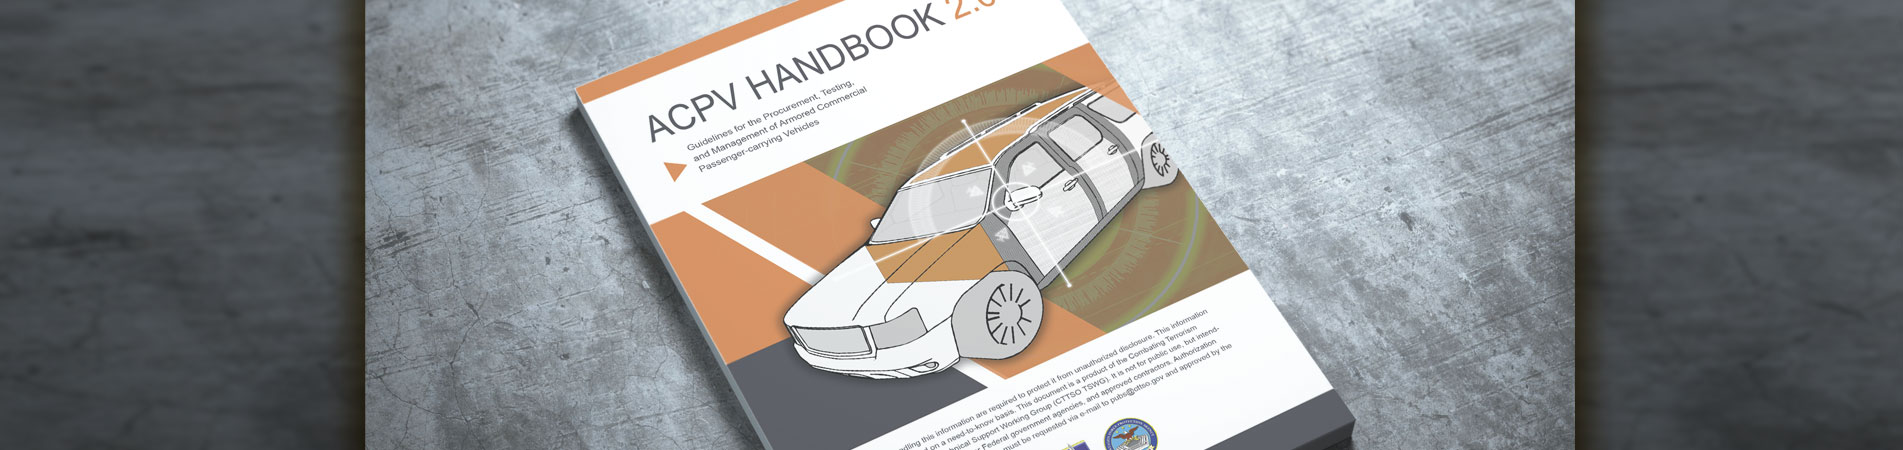 ACPV Handbook 2.0